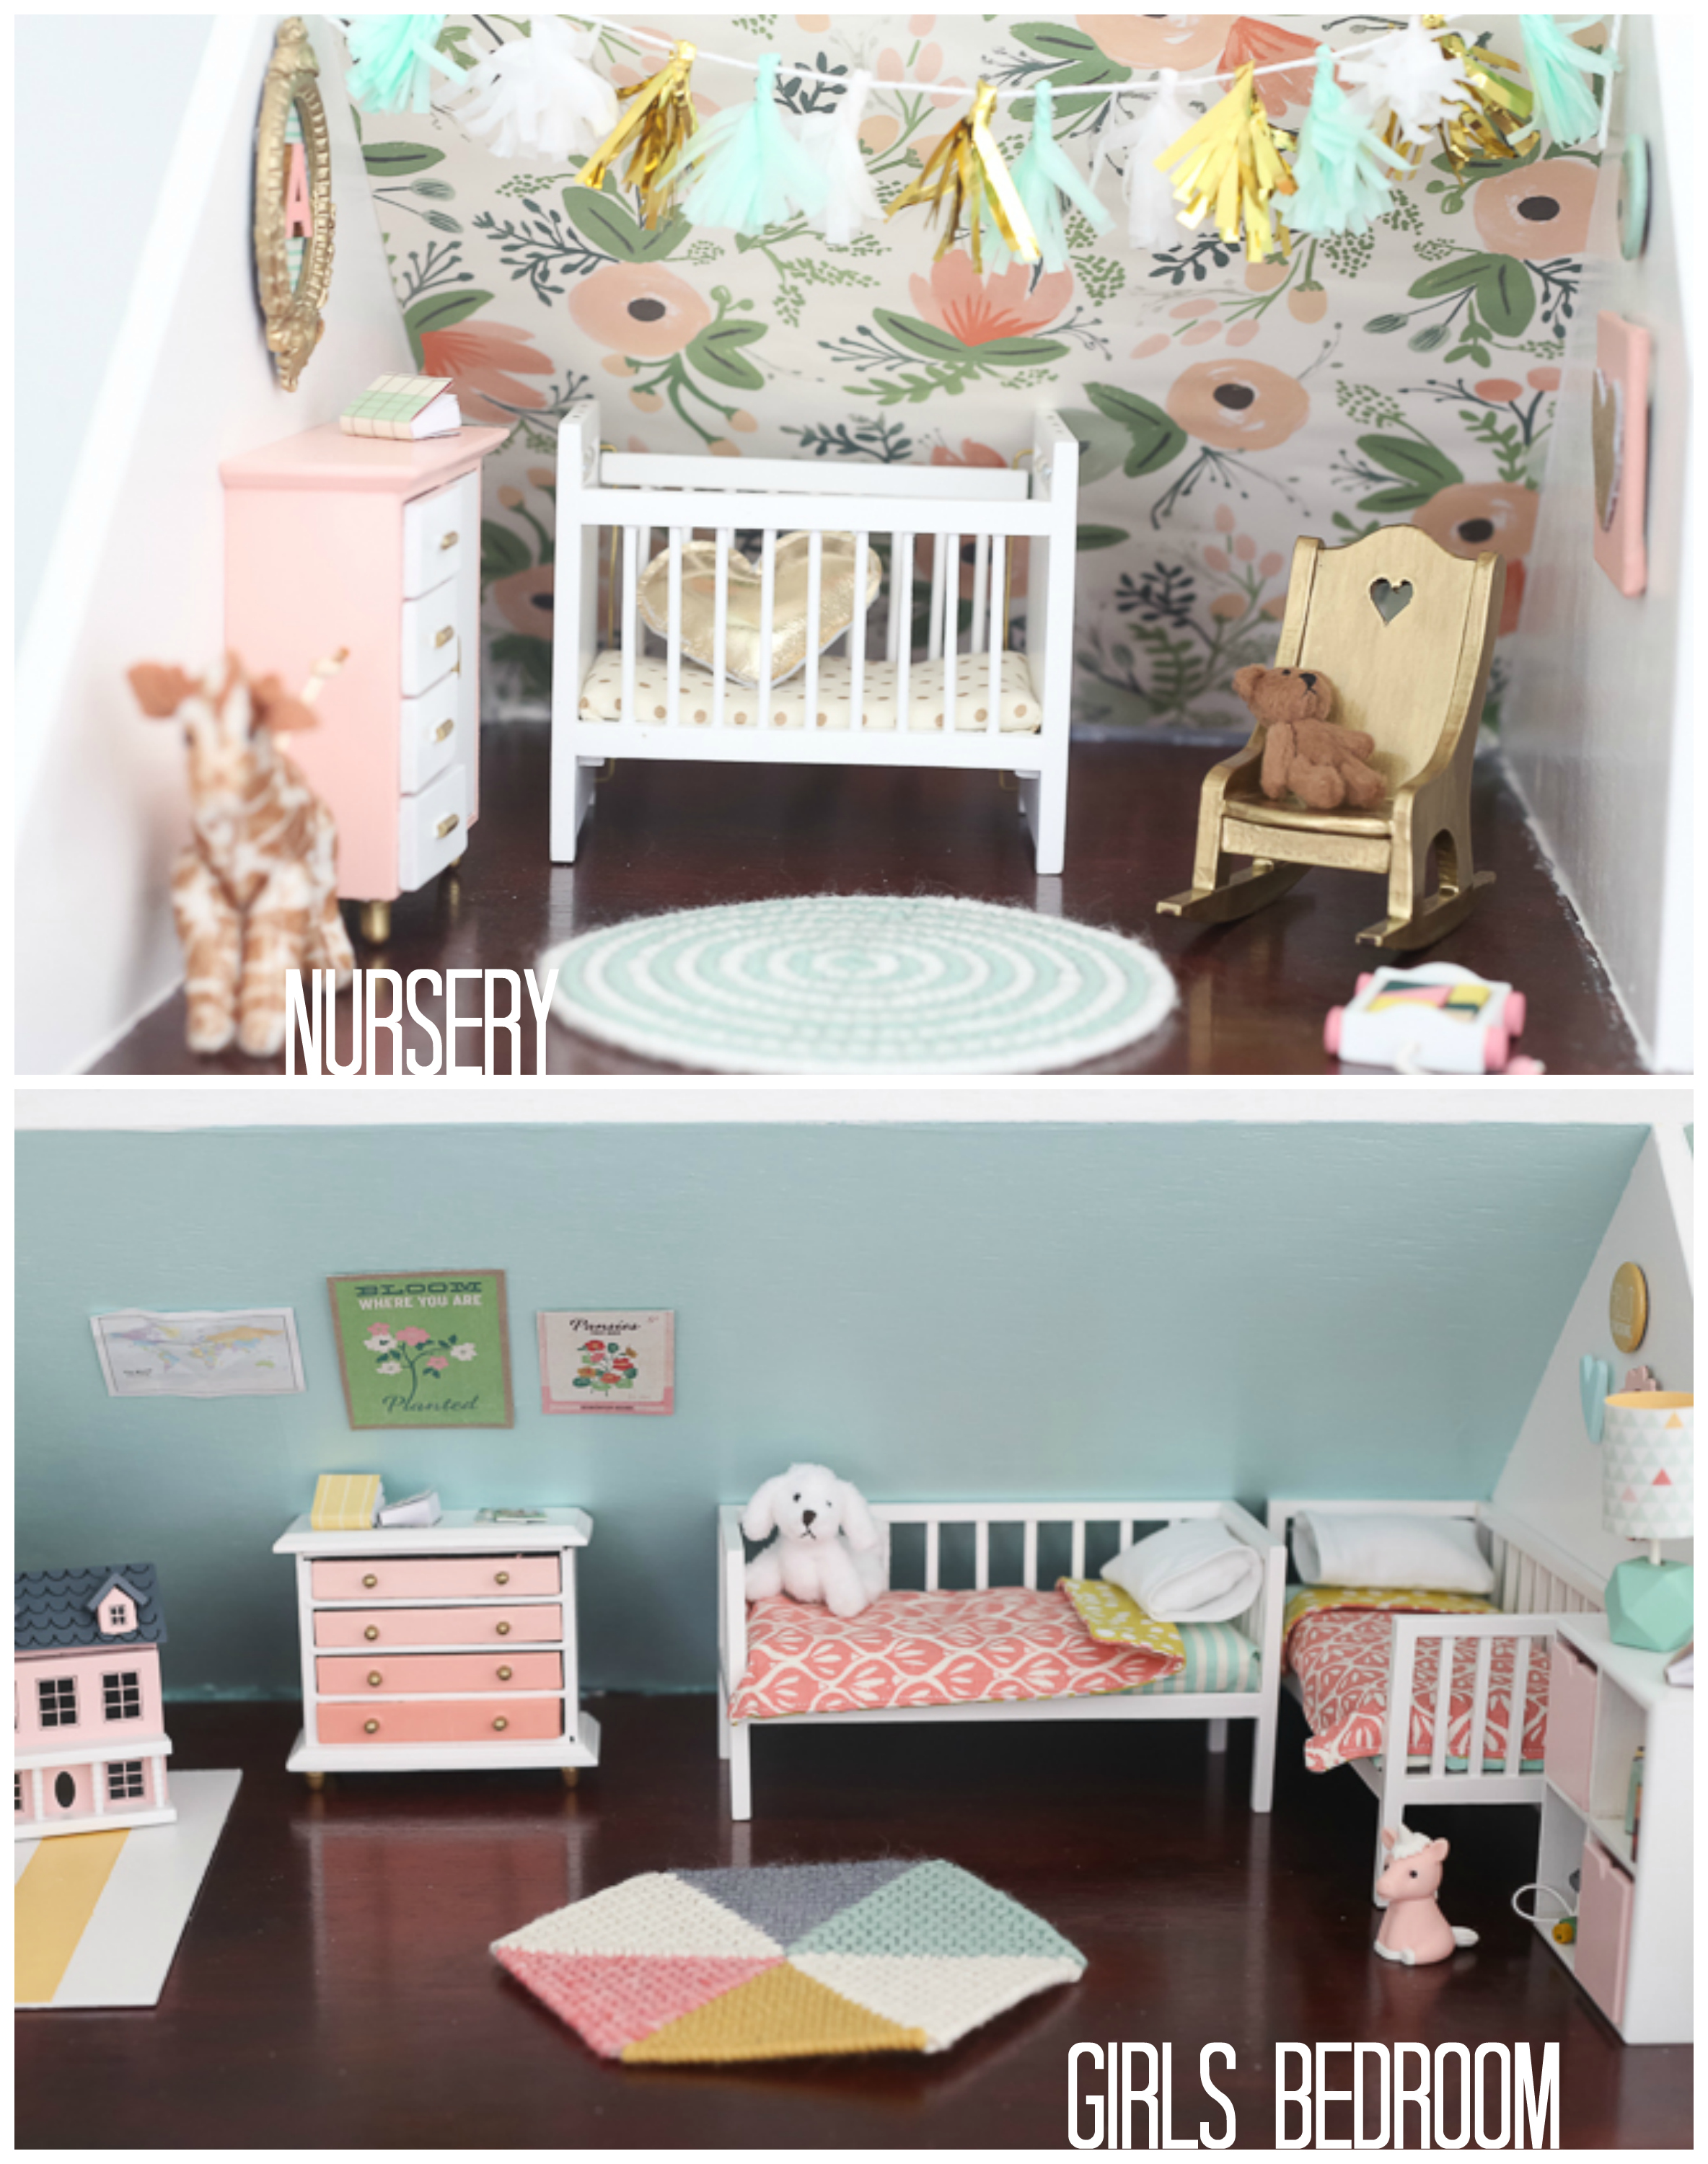 4 diy miniature dollhouse rooms